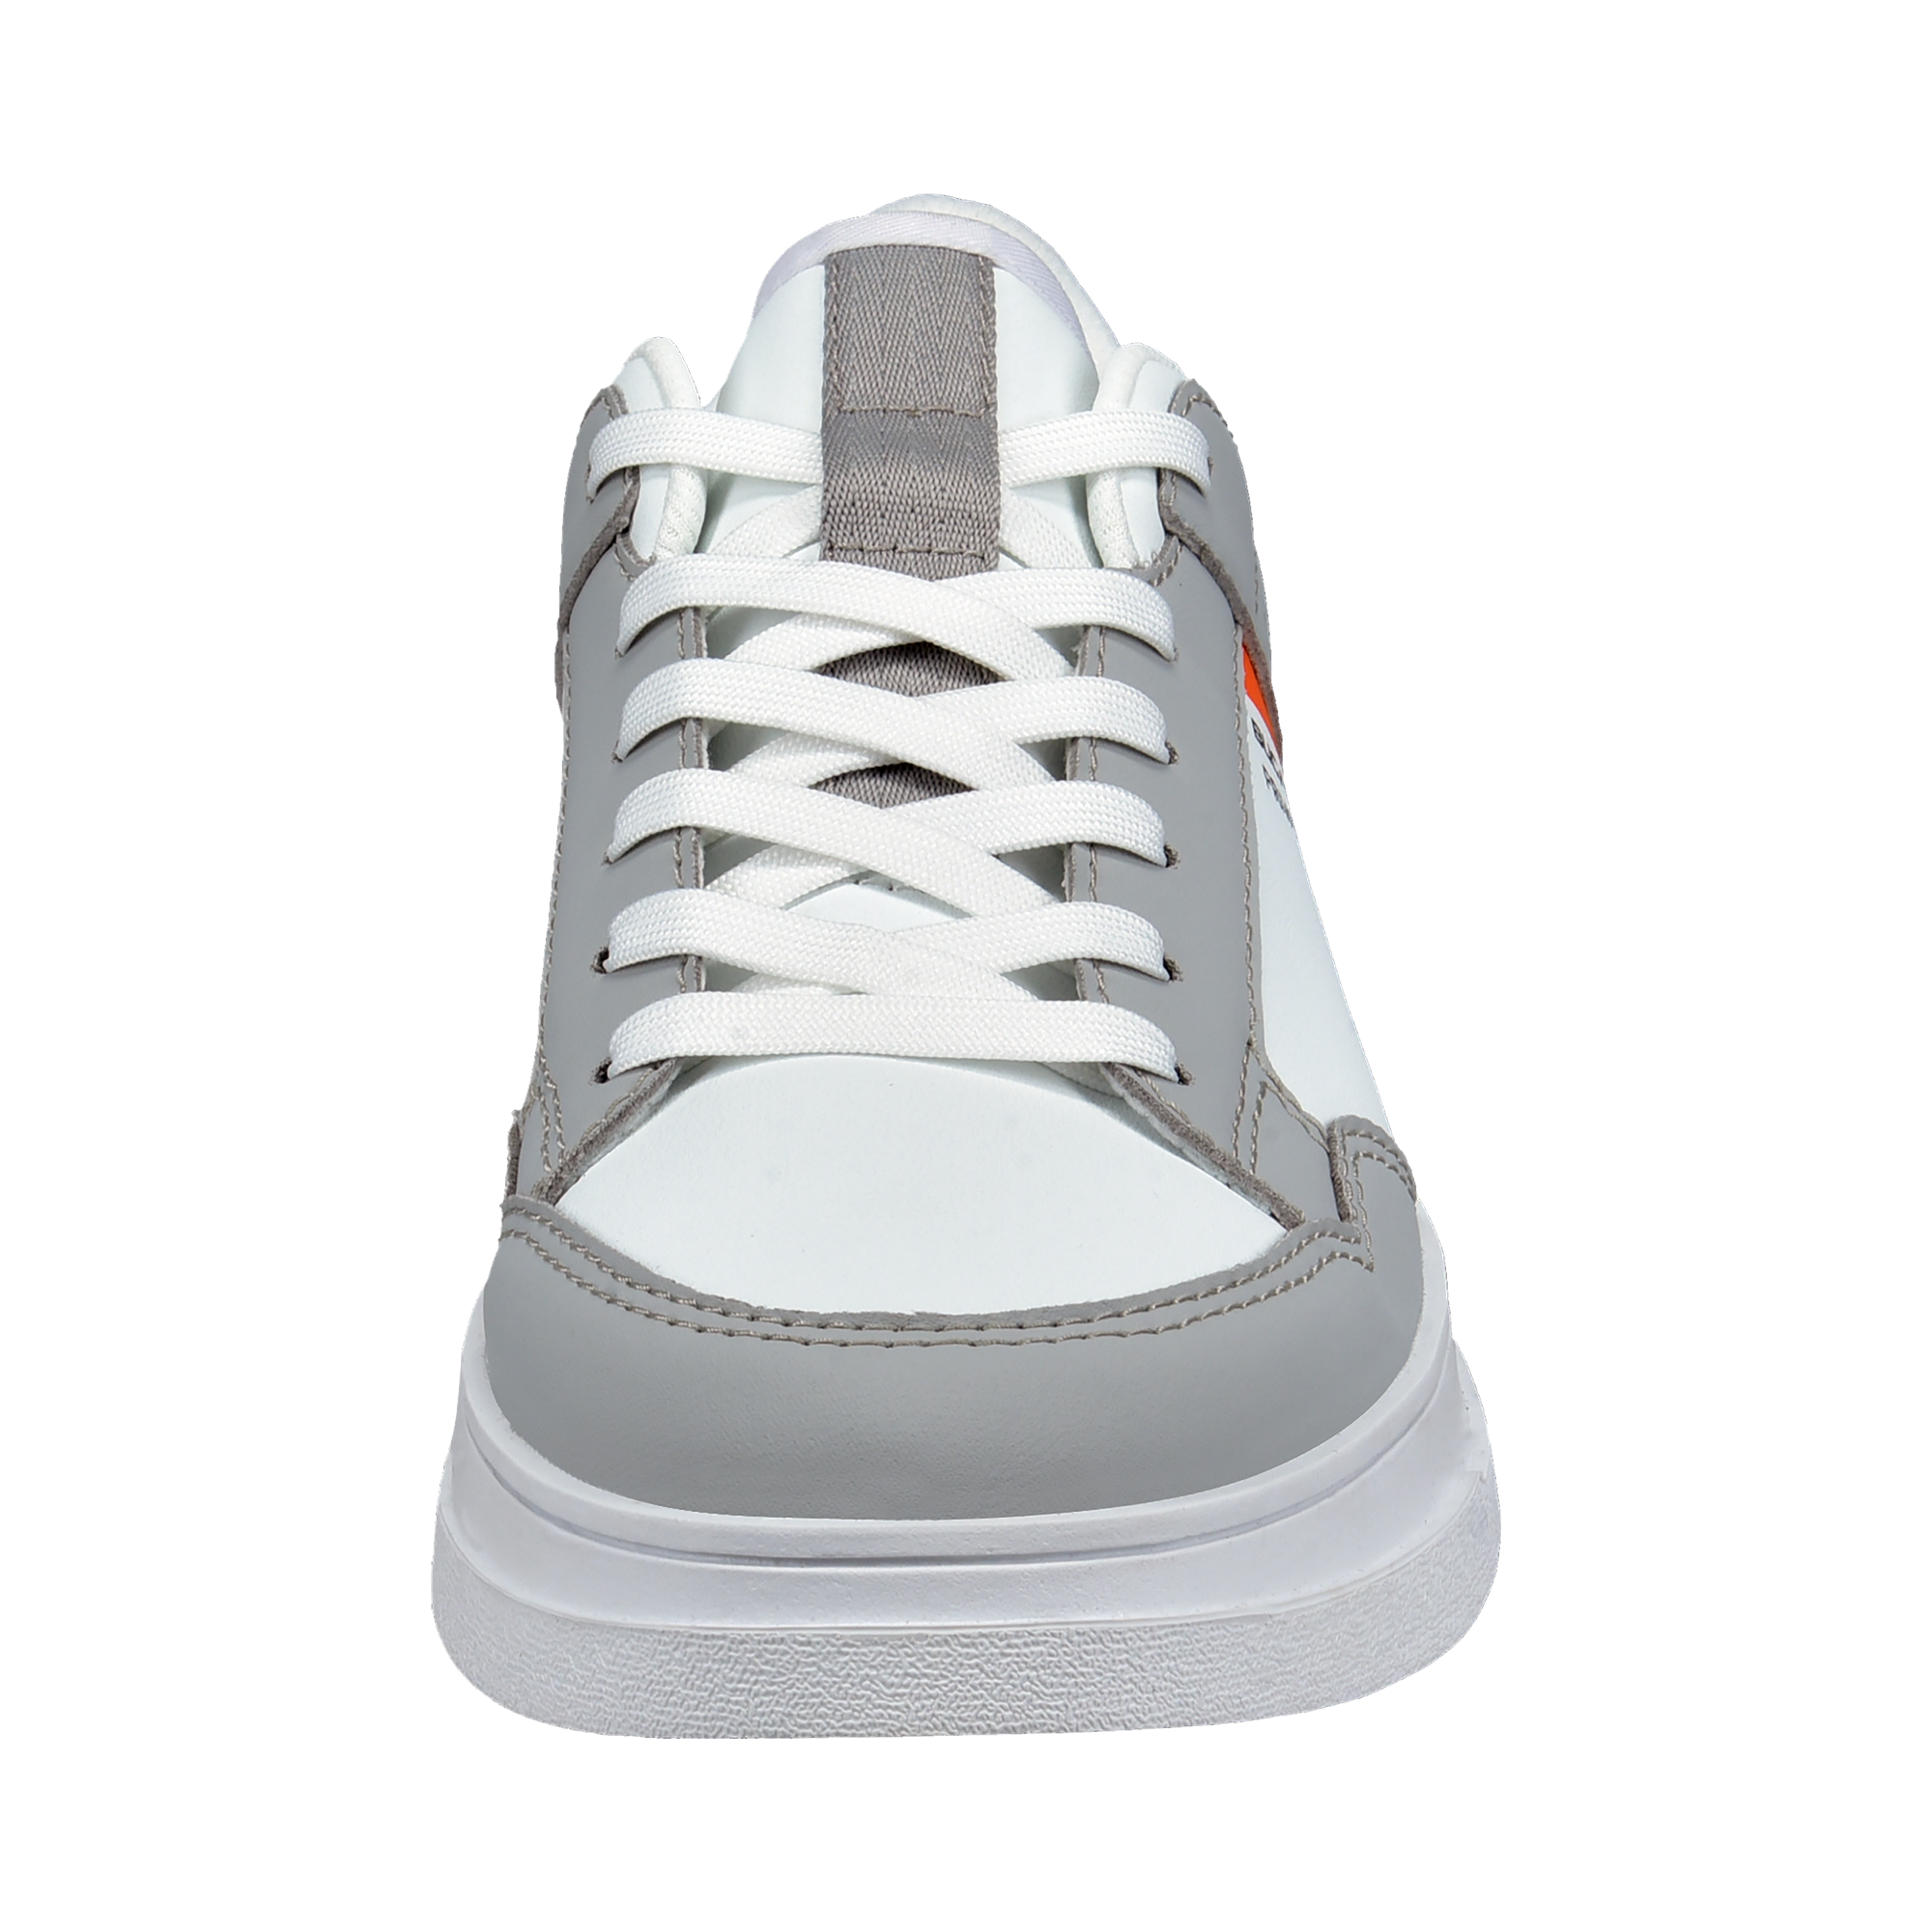 Sneaker grigio chiaro